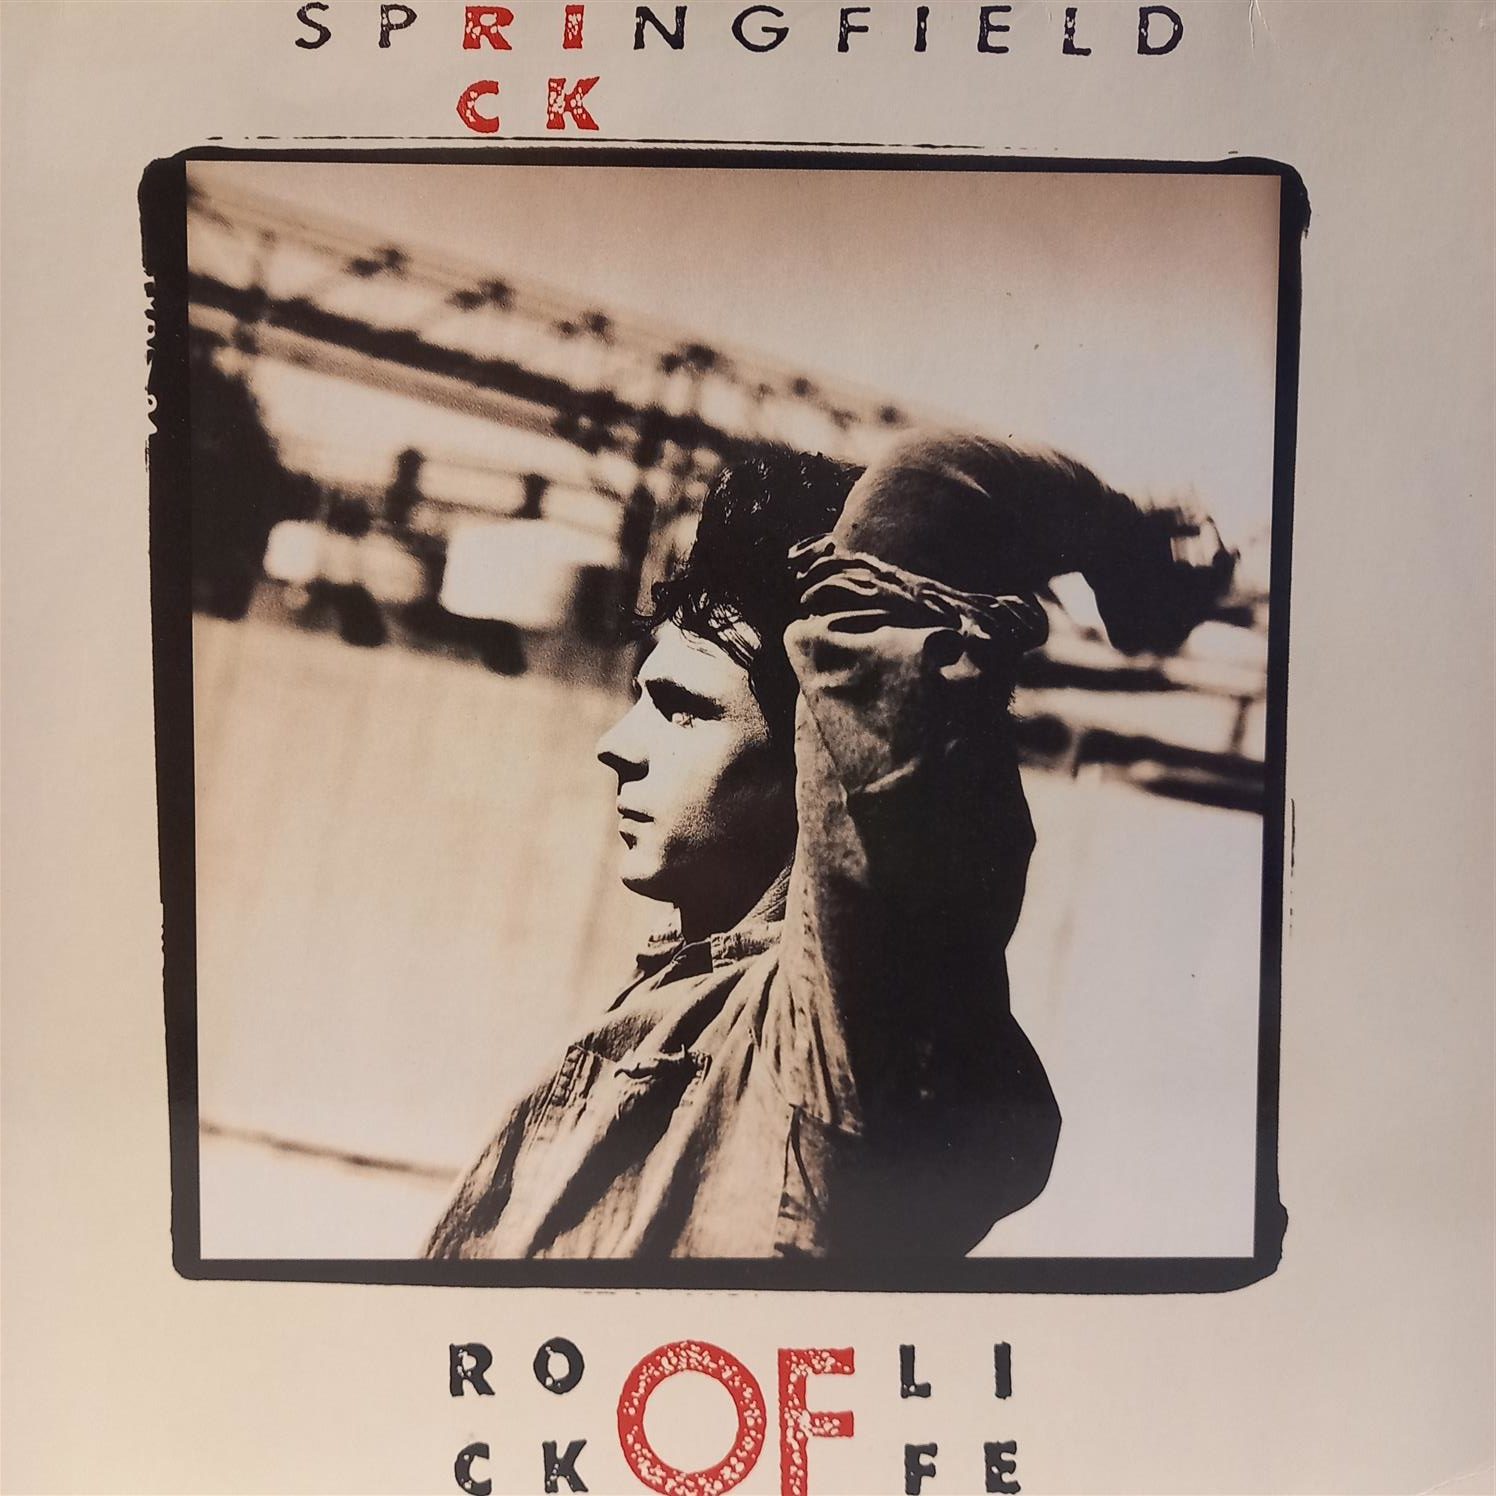 RICK SPRINGFIELD – ROCK OF LIFE ON